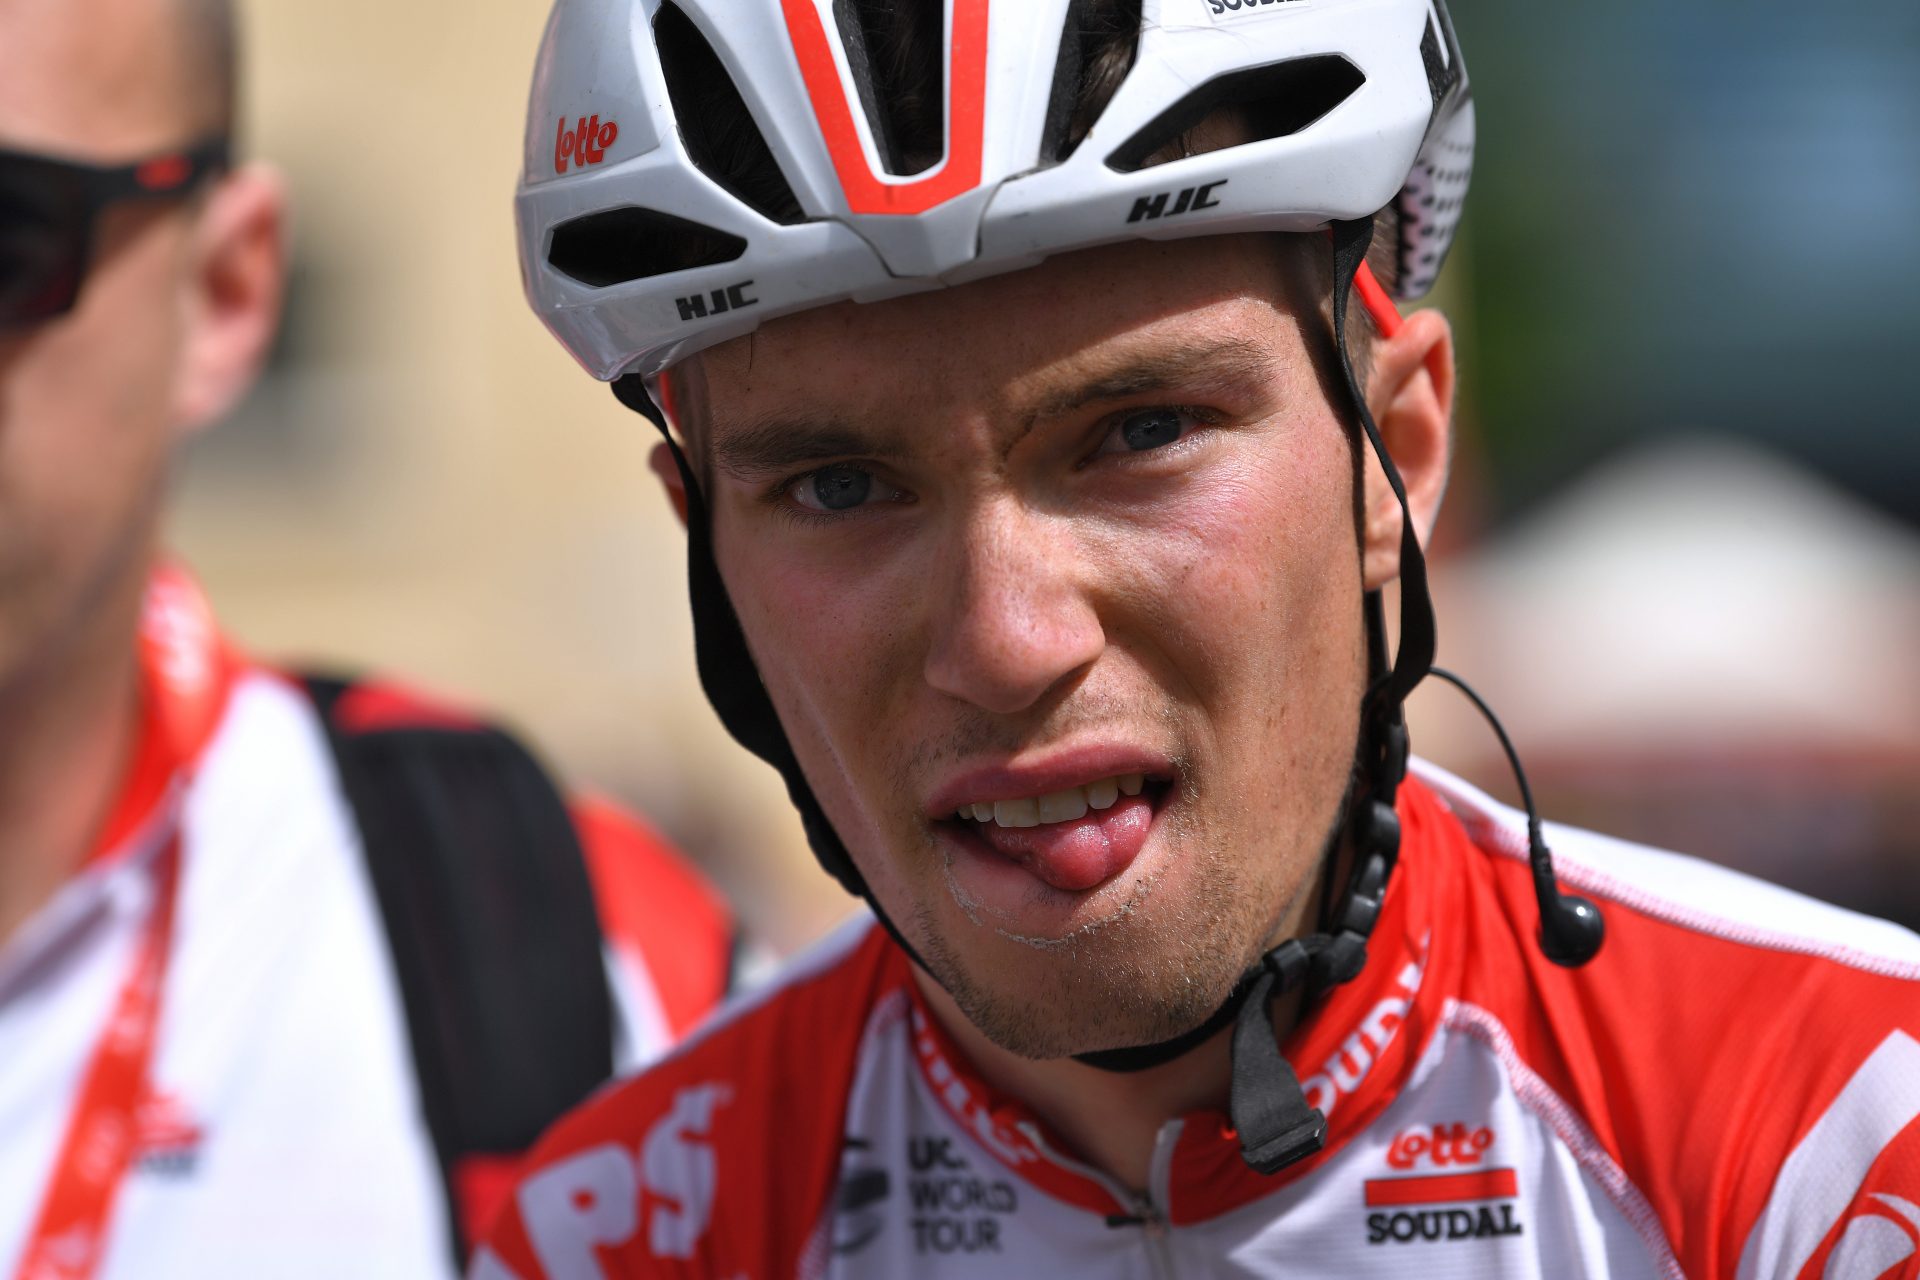 The tragic accident that killed future cycling star Bjorg Lambrecht